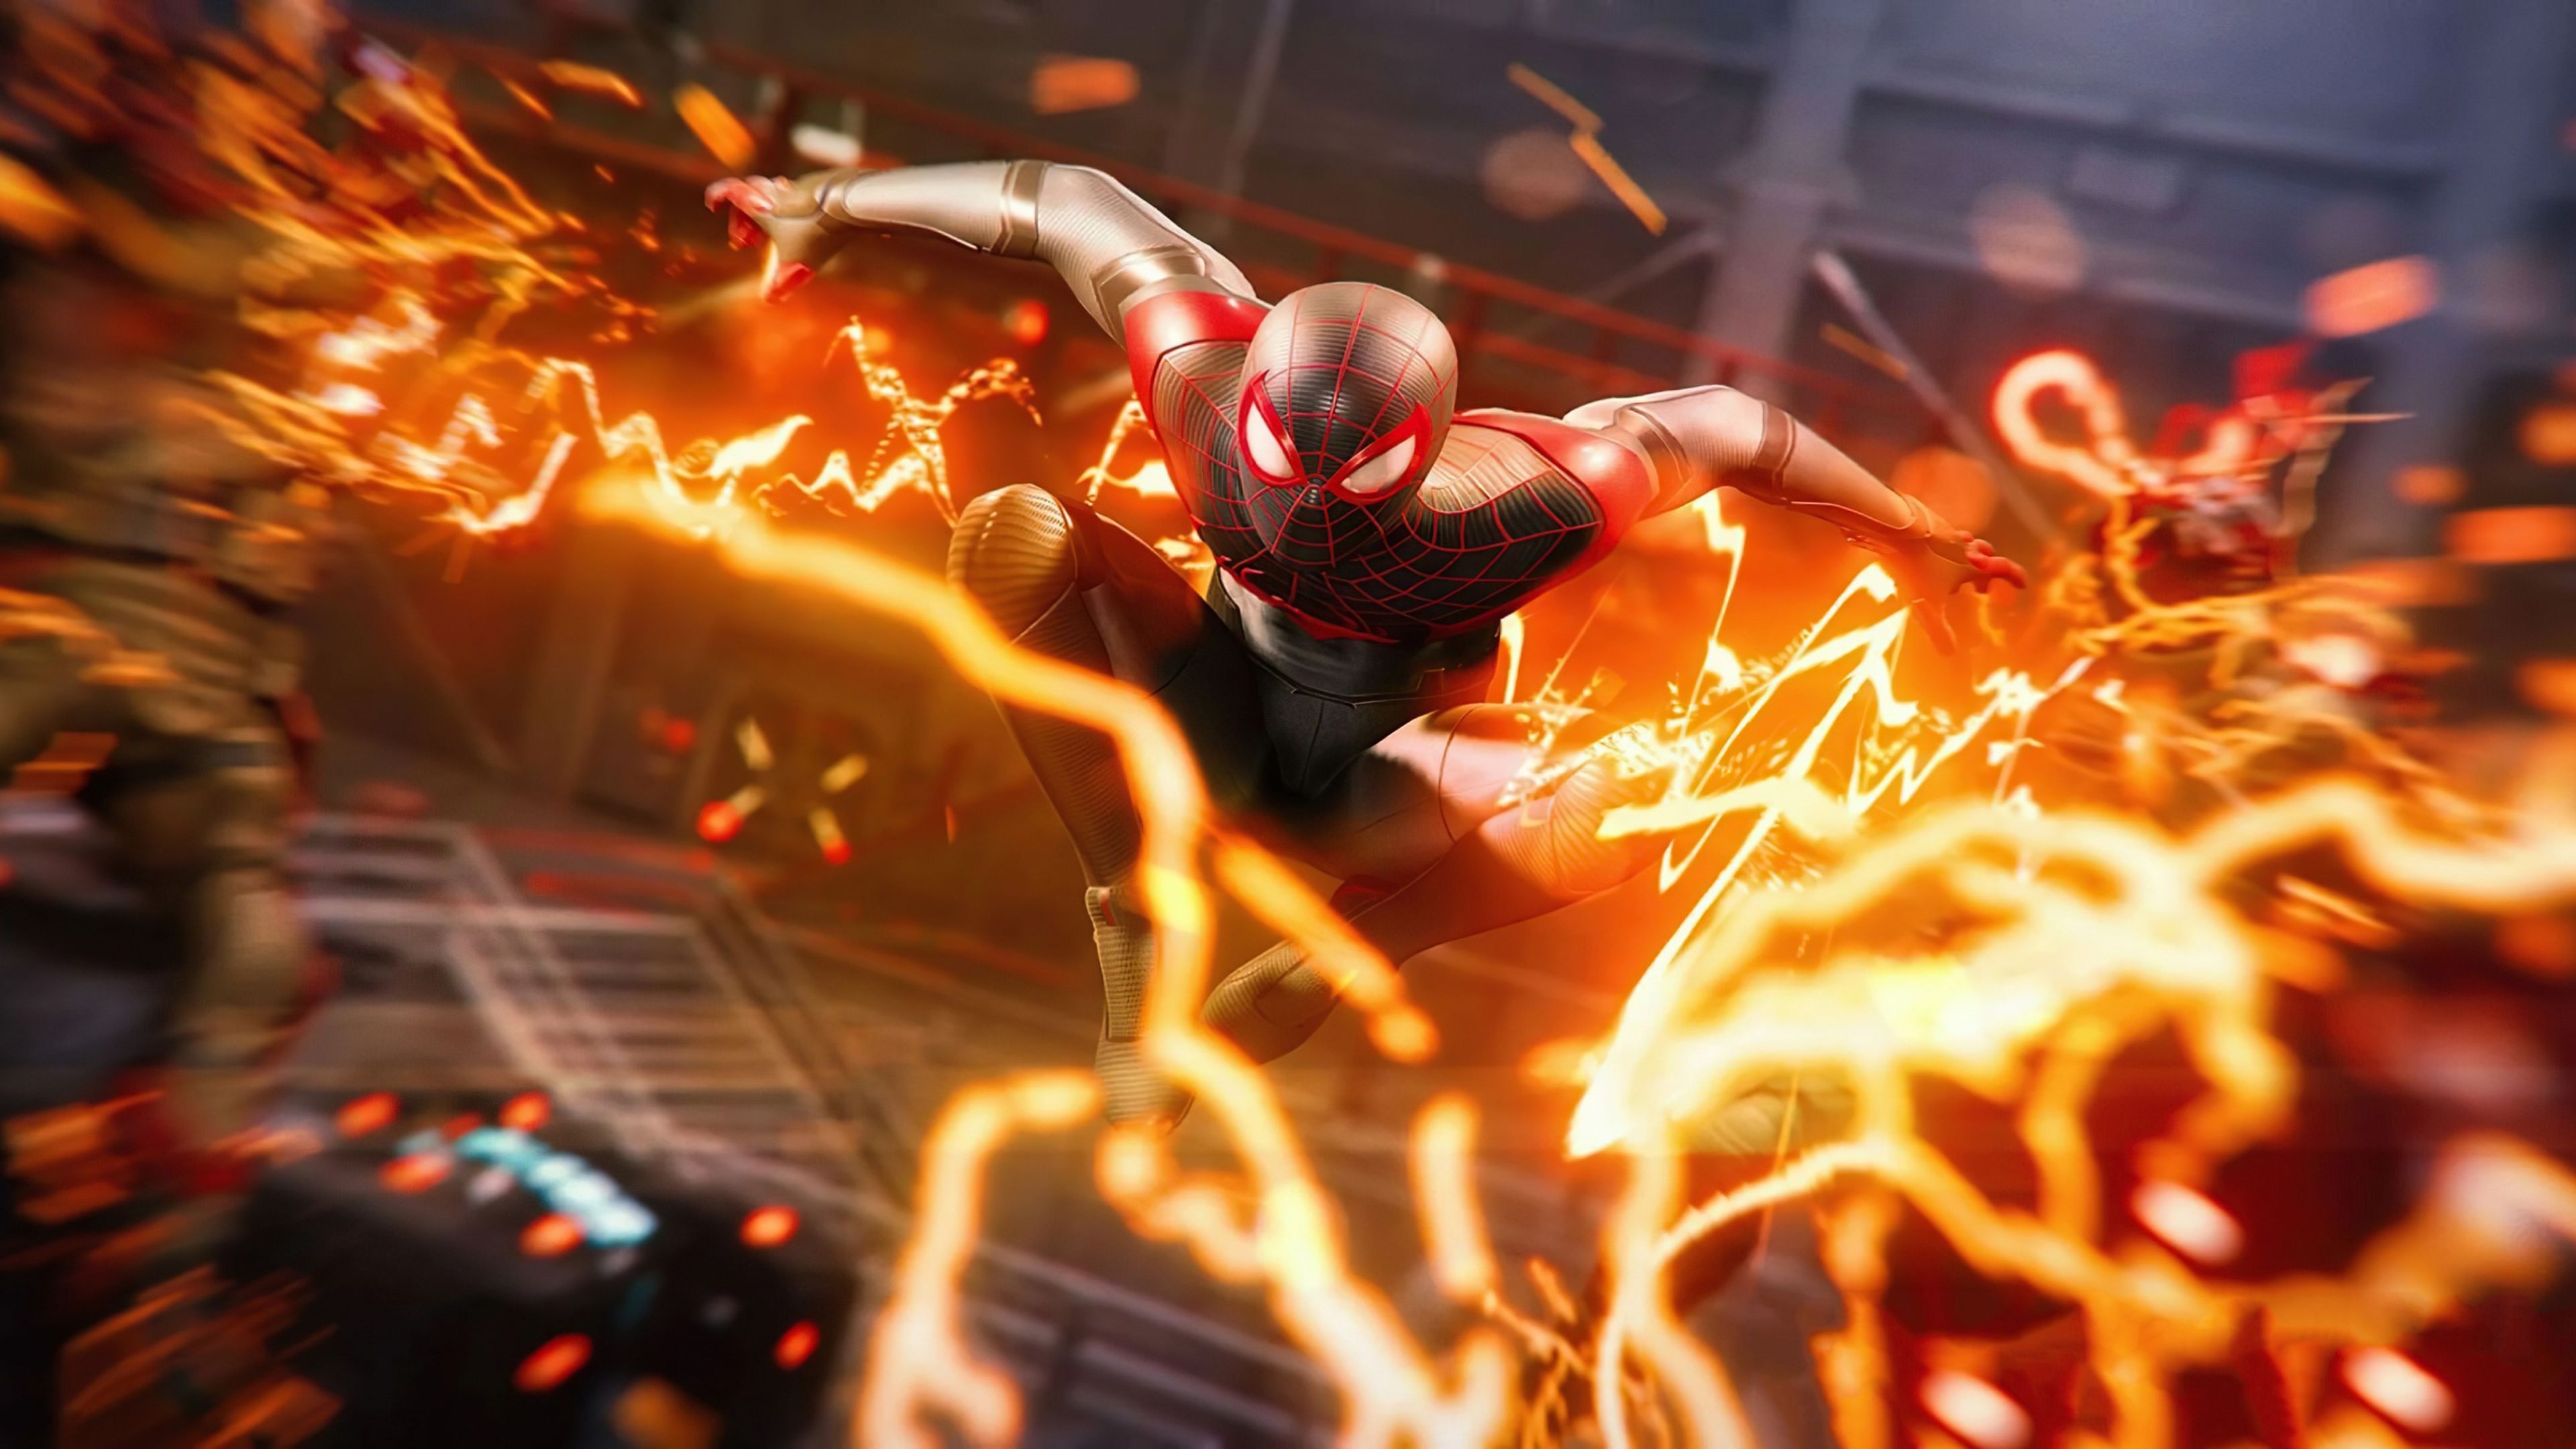 REQUISITOS SPIDERMAN PC  Marvel's Spiderman PC 